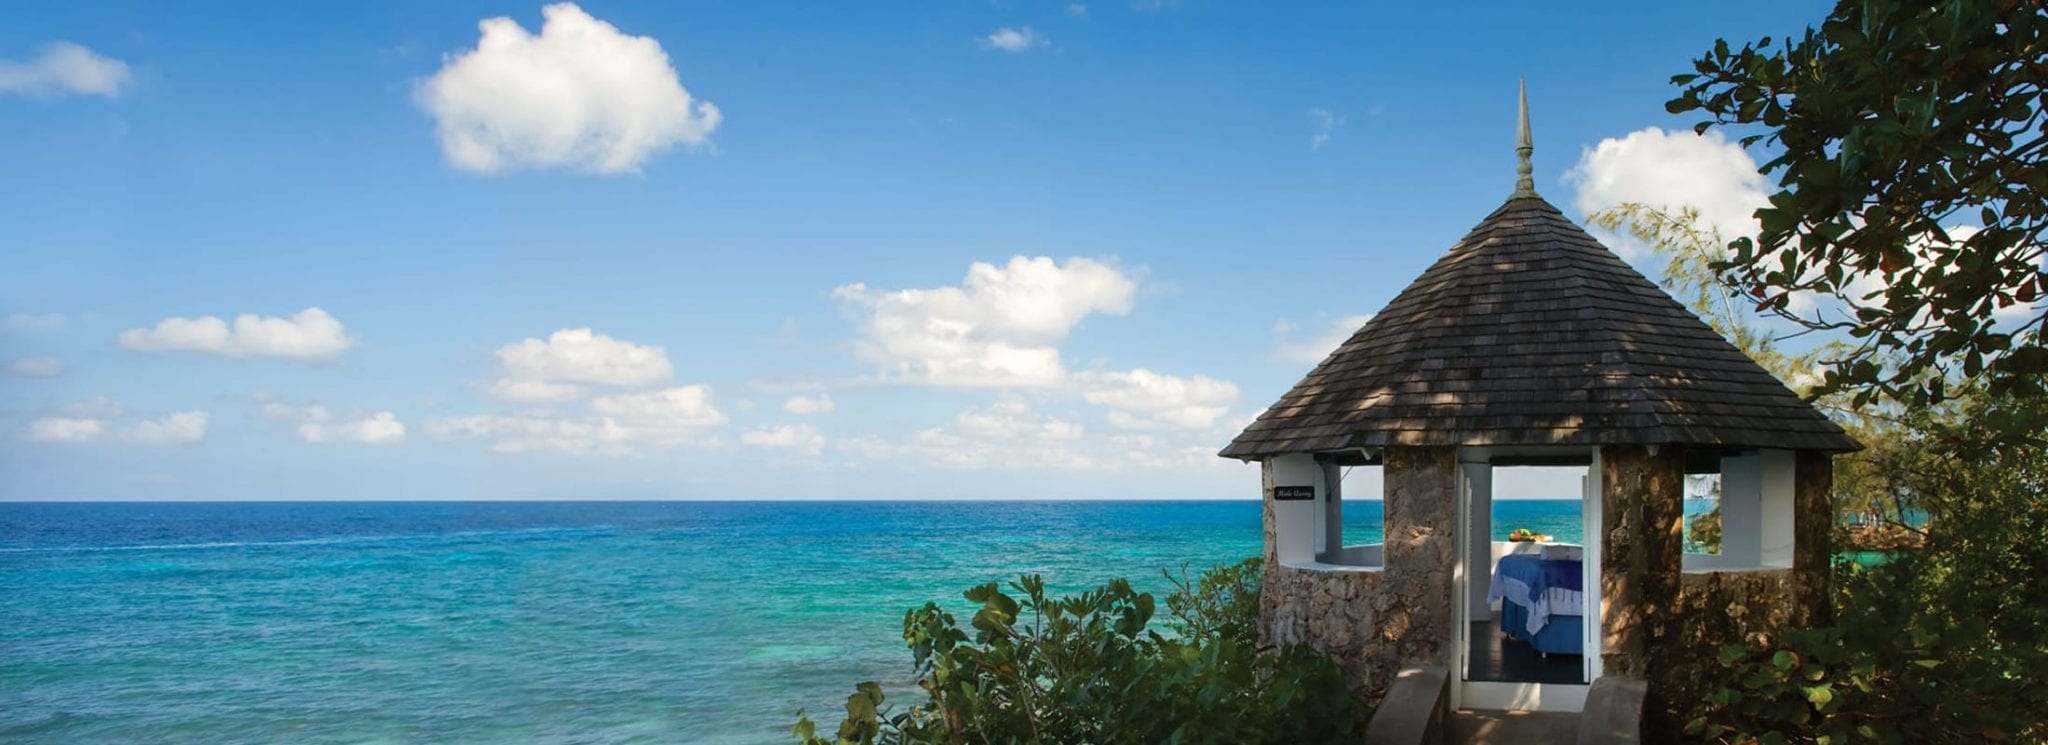 Jamaica Adult Vacations 56